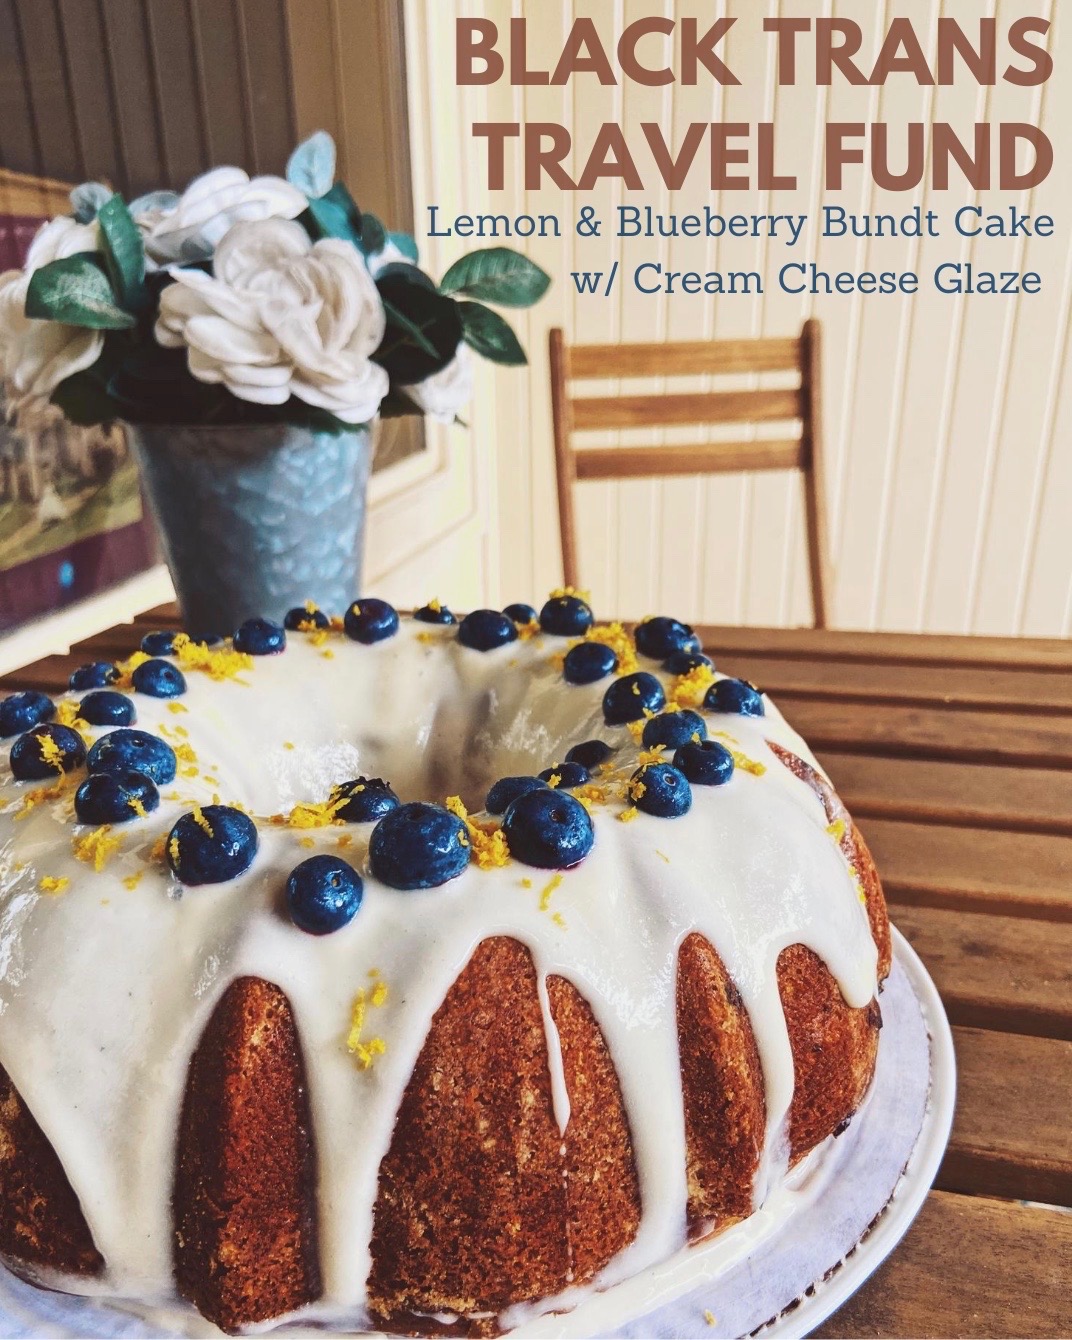 Cake for Black Trans Travel Fund